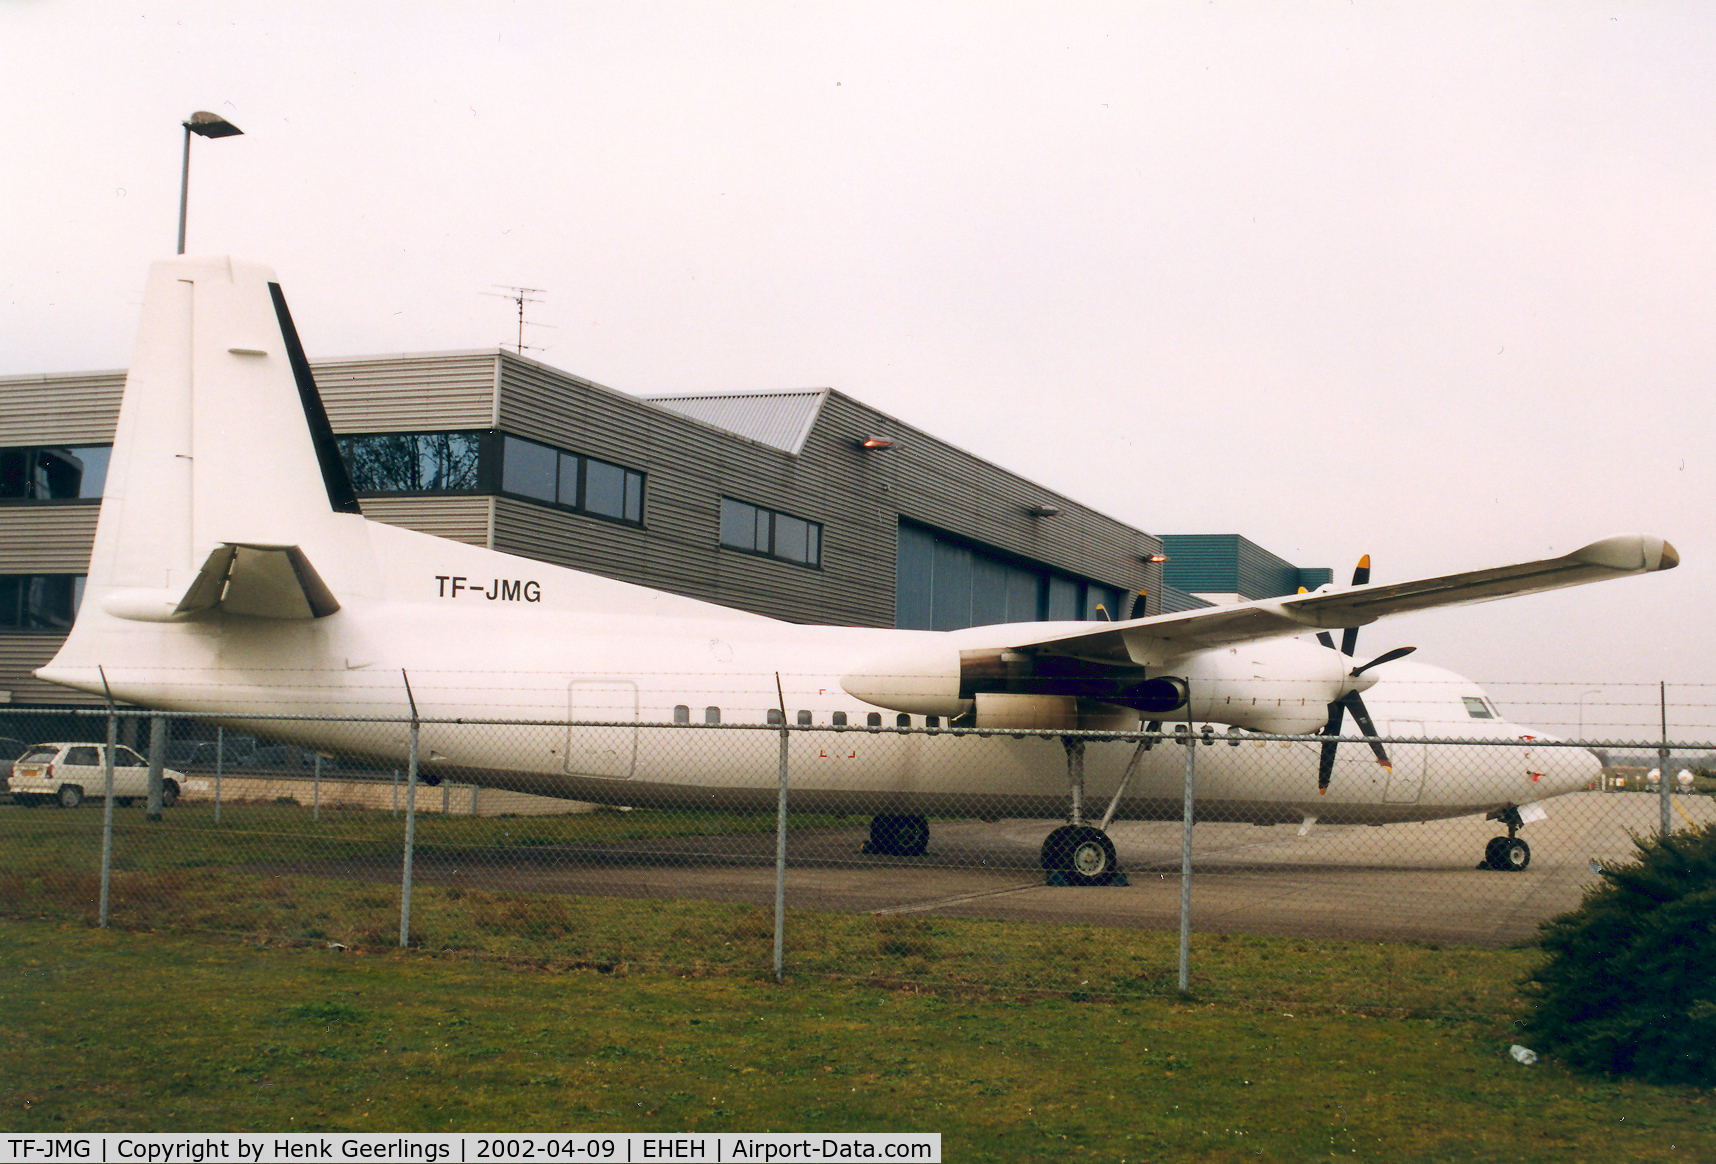 TF-JMG, 1989 Fokker 50 C/N 20144, ex Air Iceland